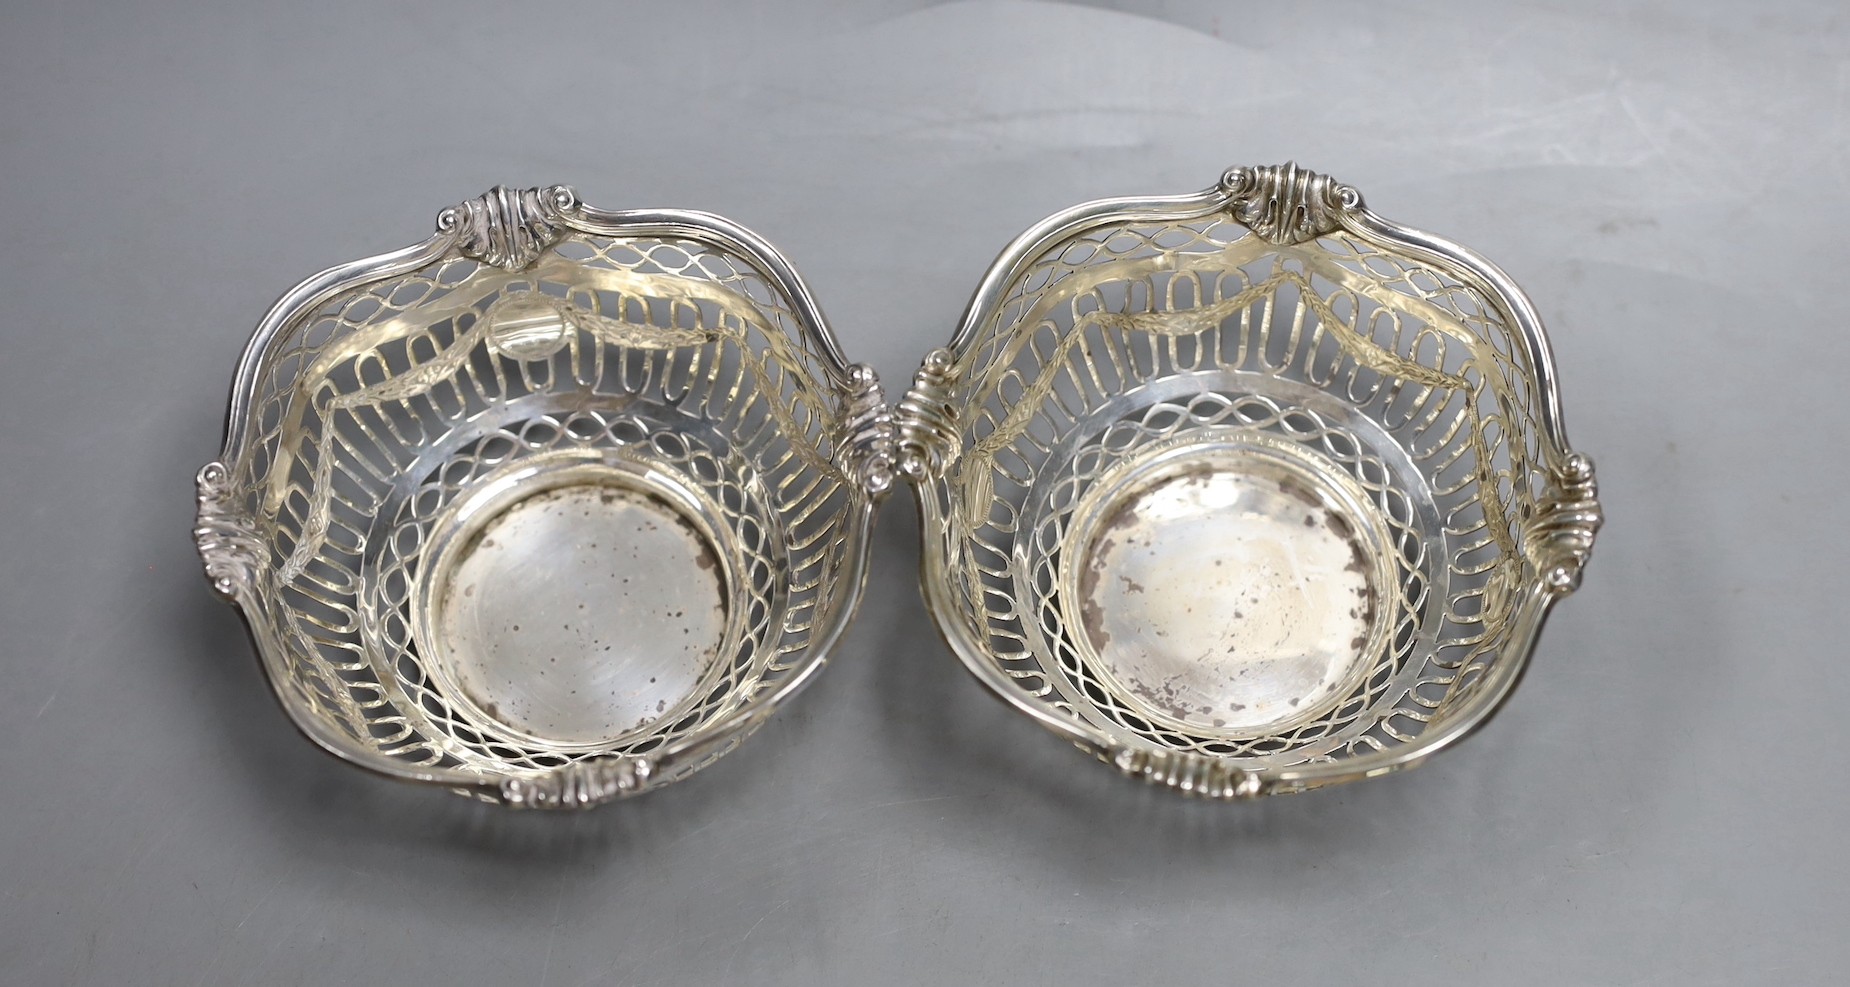 A pair of Edwardian Scottish pieced silver bonbon dishes, Hamilton & Inches, Edinburgh, 1902, diameter 10.6cm, 206 grams.